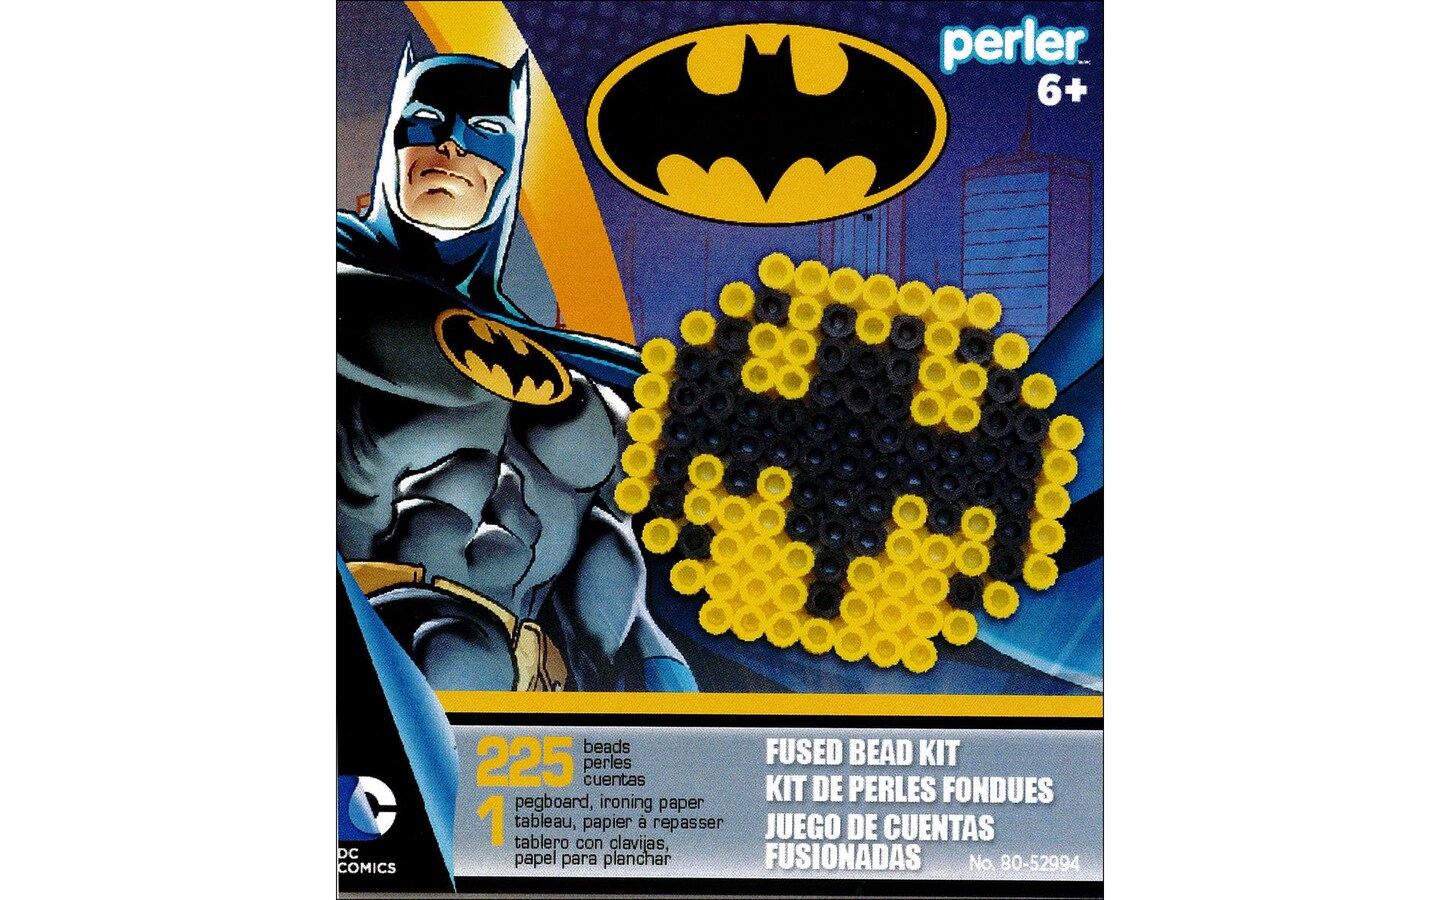 Perler Batman Fused Bead Kit, 1 ct - Foods Co.